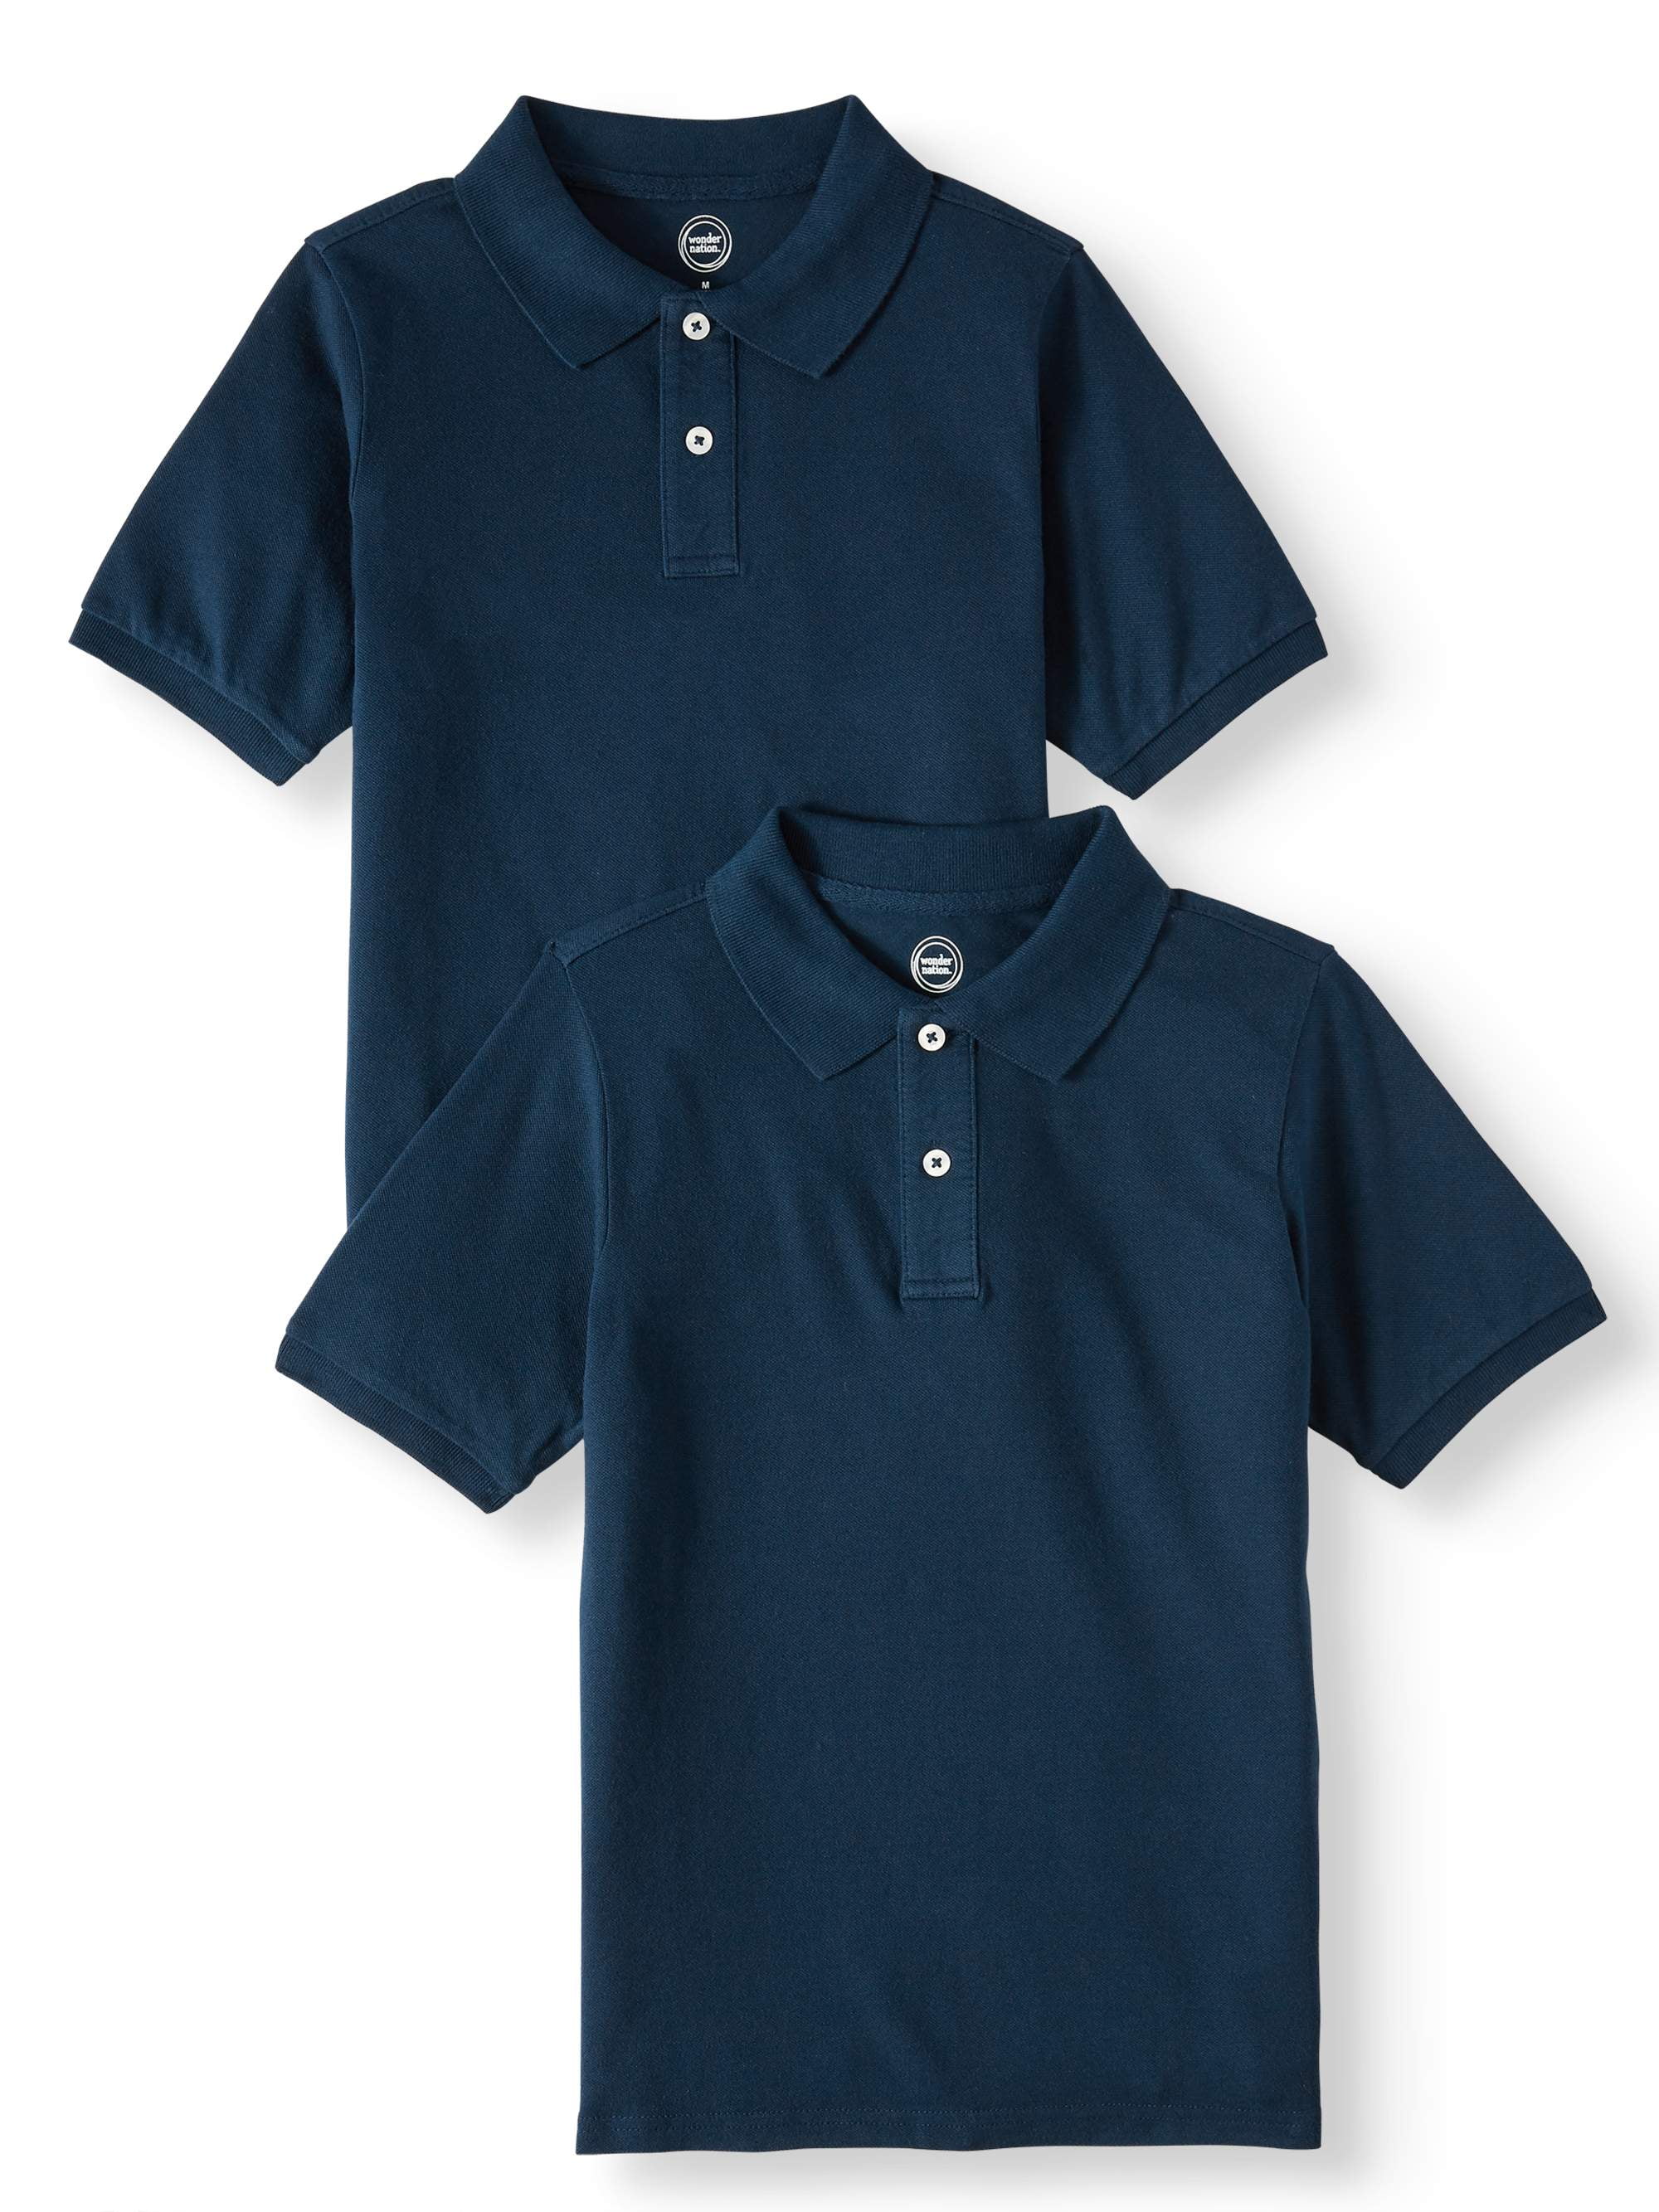 Boys Wonder Nation School Uniform Blue Short Sleeve Pique Polo 14-16 2 pk